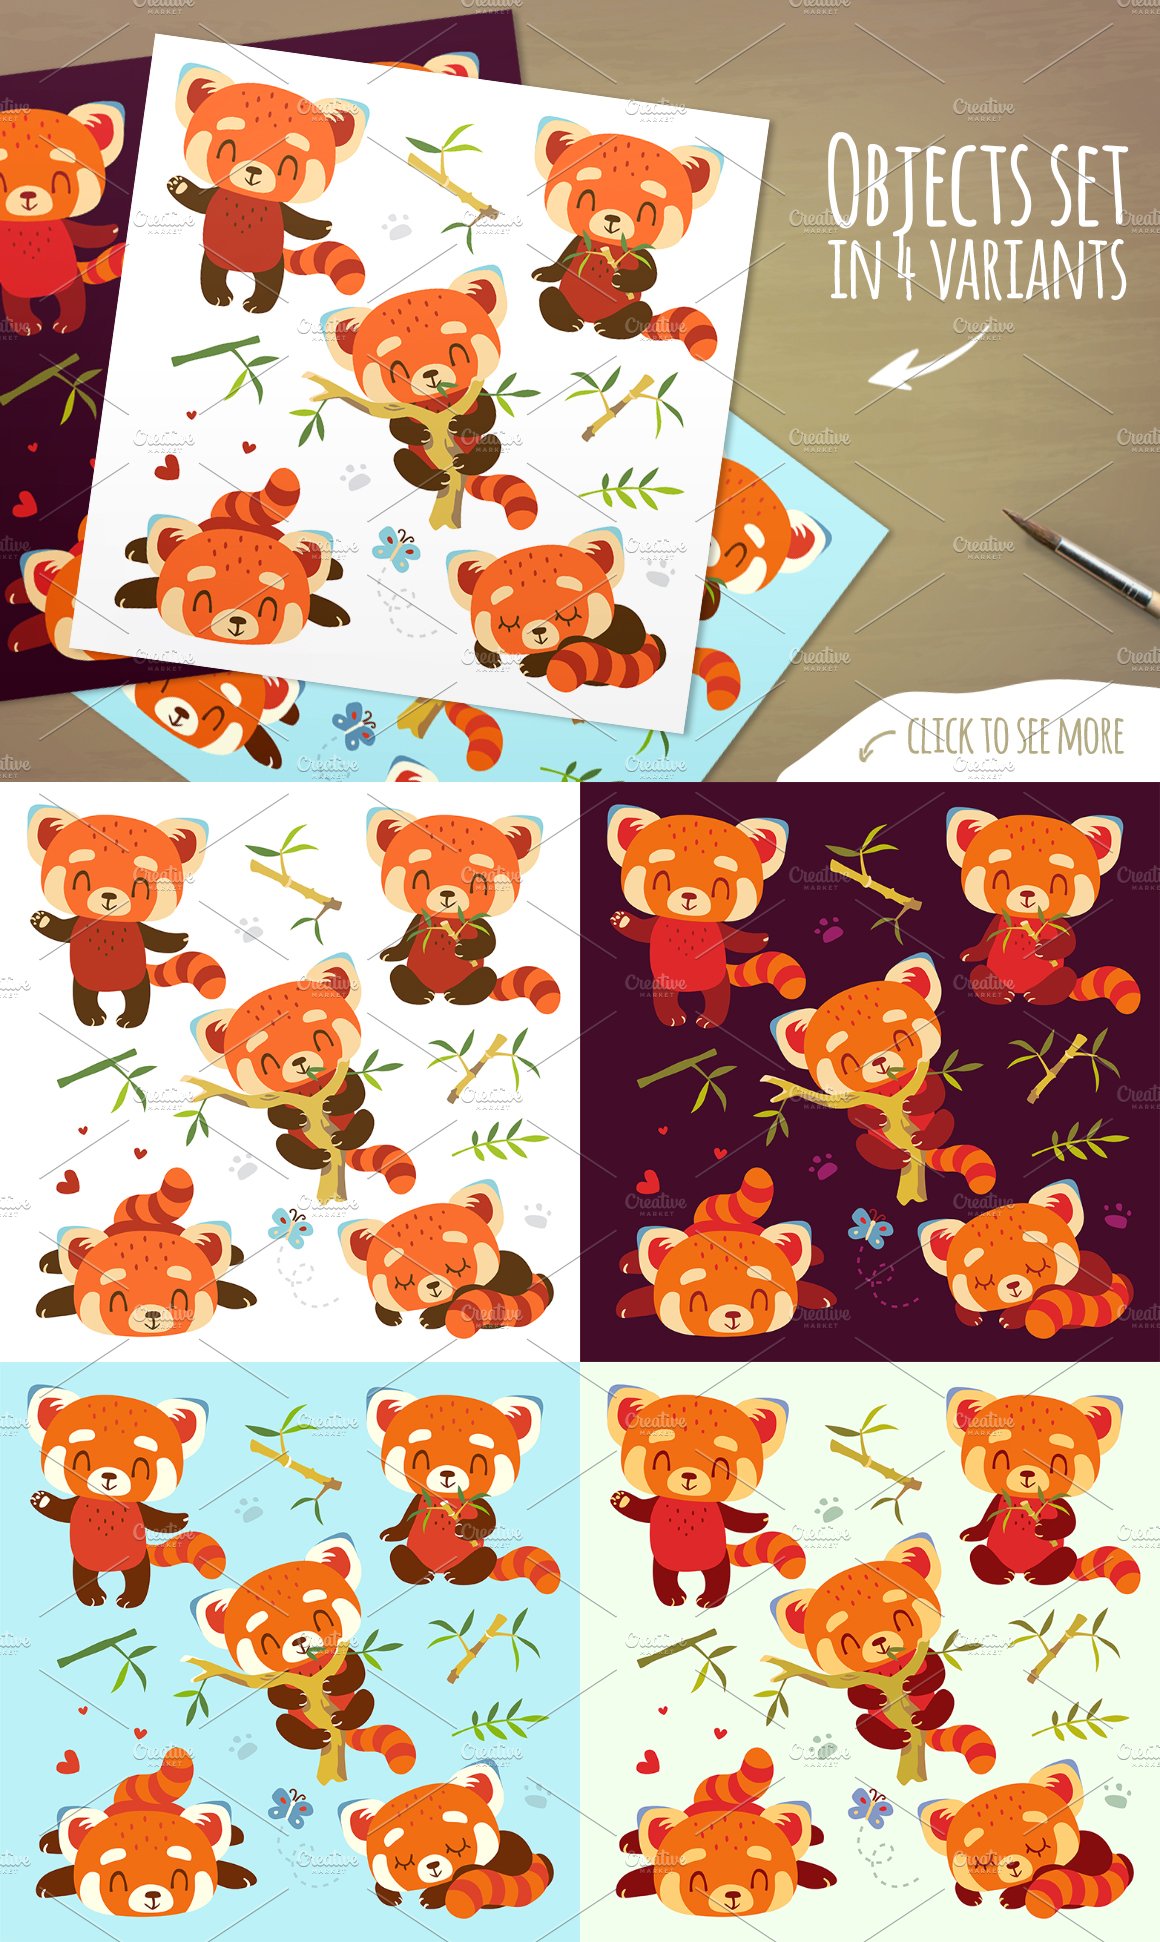 Red Panda Set preview image.